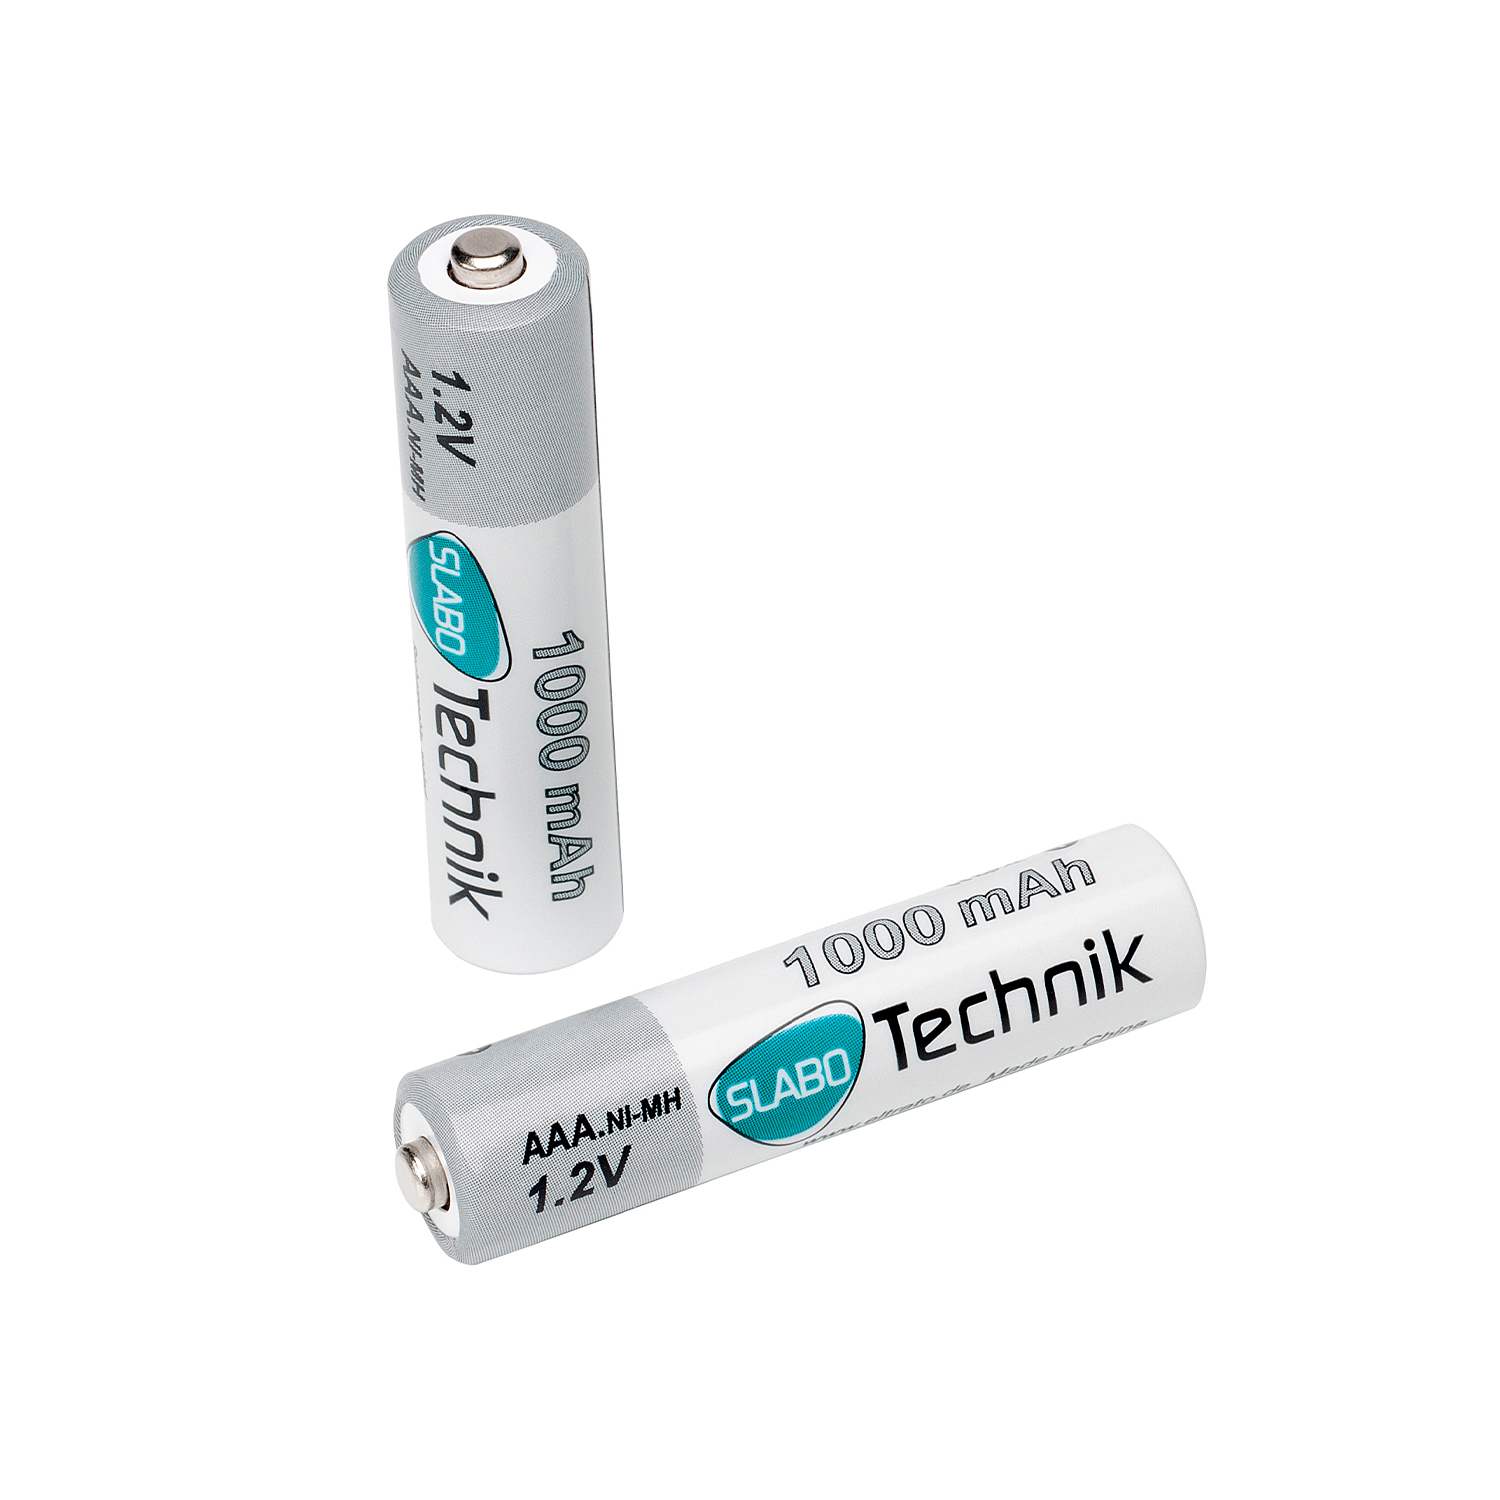 SLABO Ni-MH / Micro - Akku Batterien Akku Batterie 1.2V Ni-MH Micro wiederaufladbar AAA AAA 12er-Pack Batterien 1000mAh wiederaufladbar